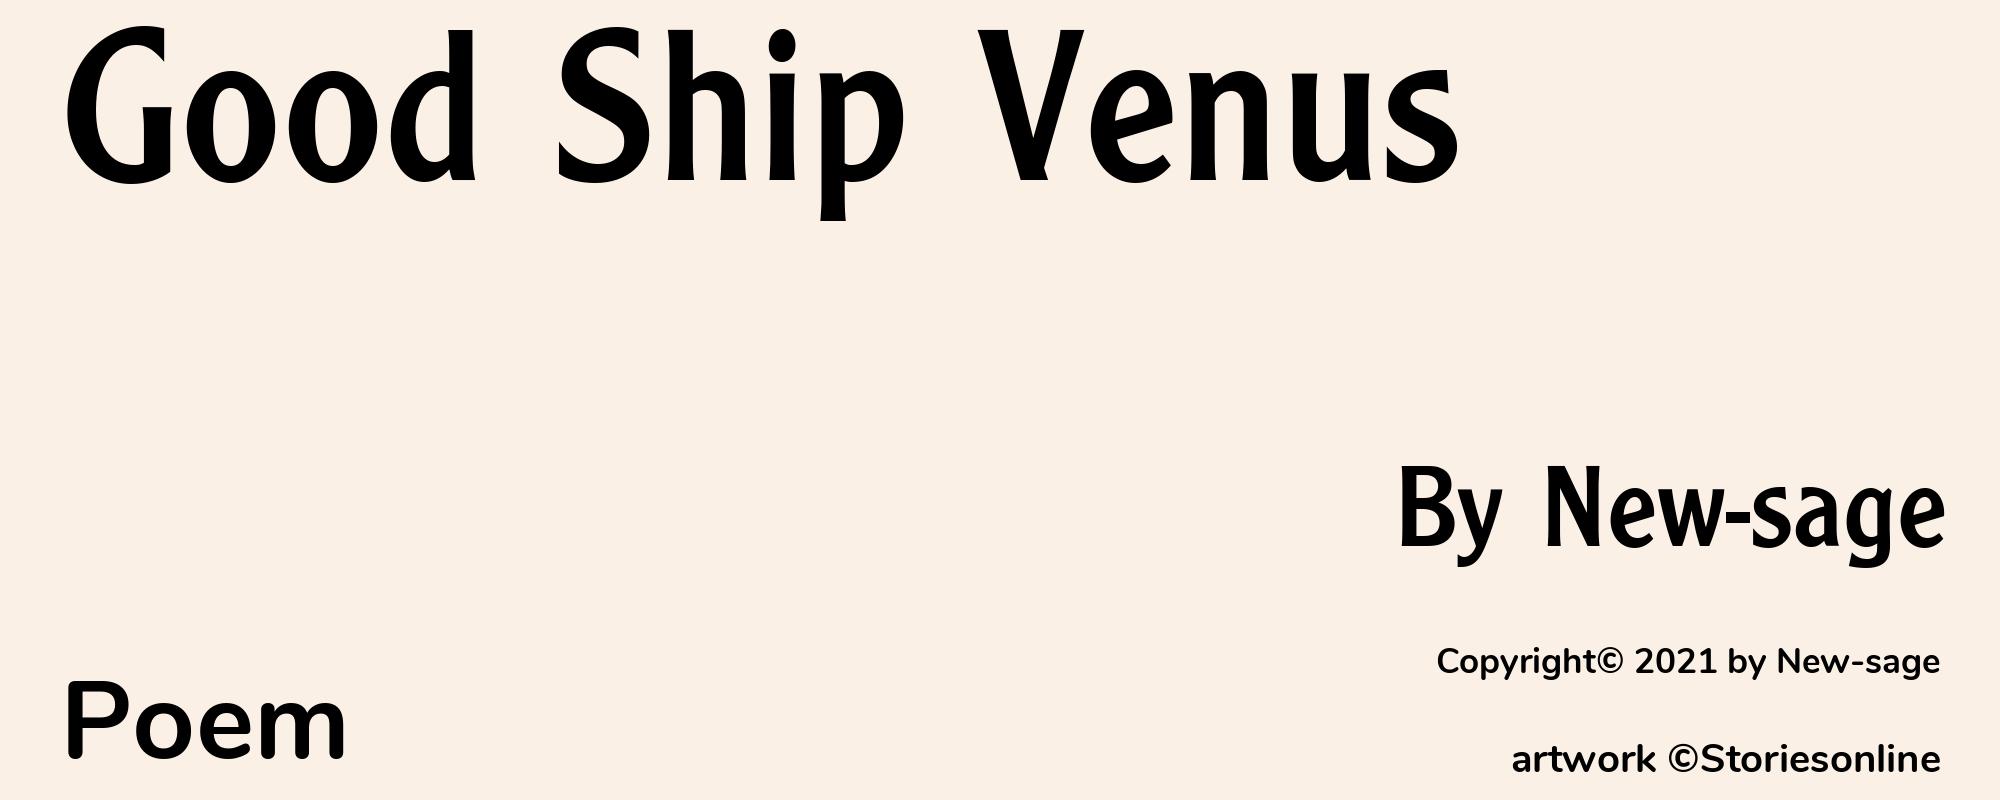 Good Ship Venus - Cover